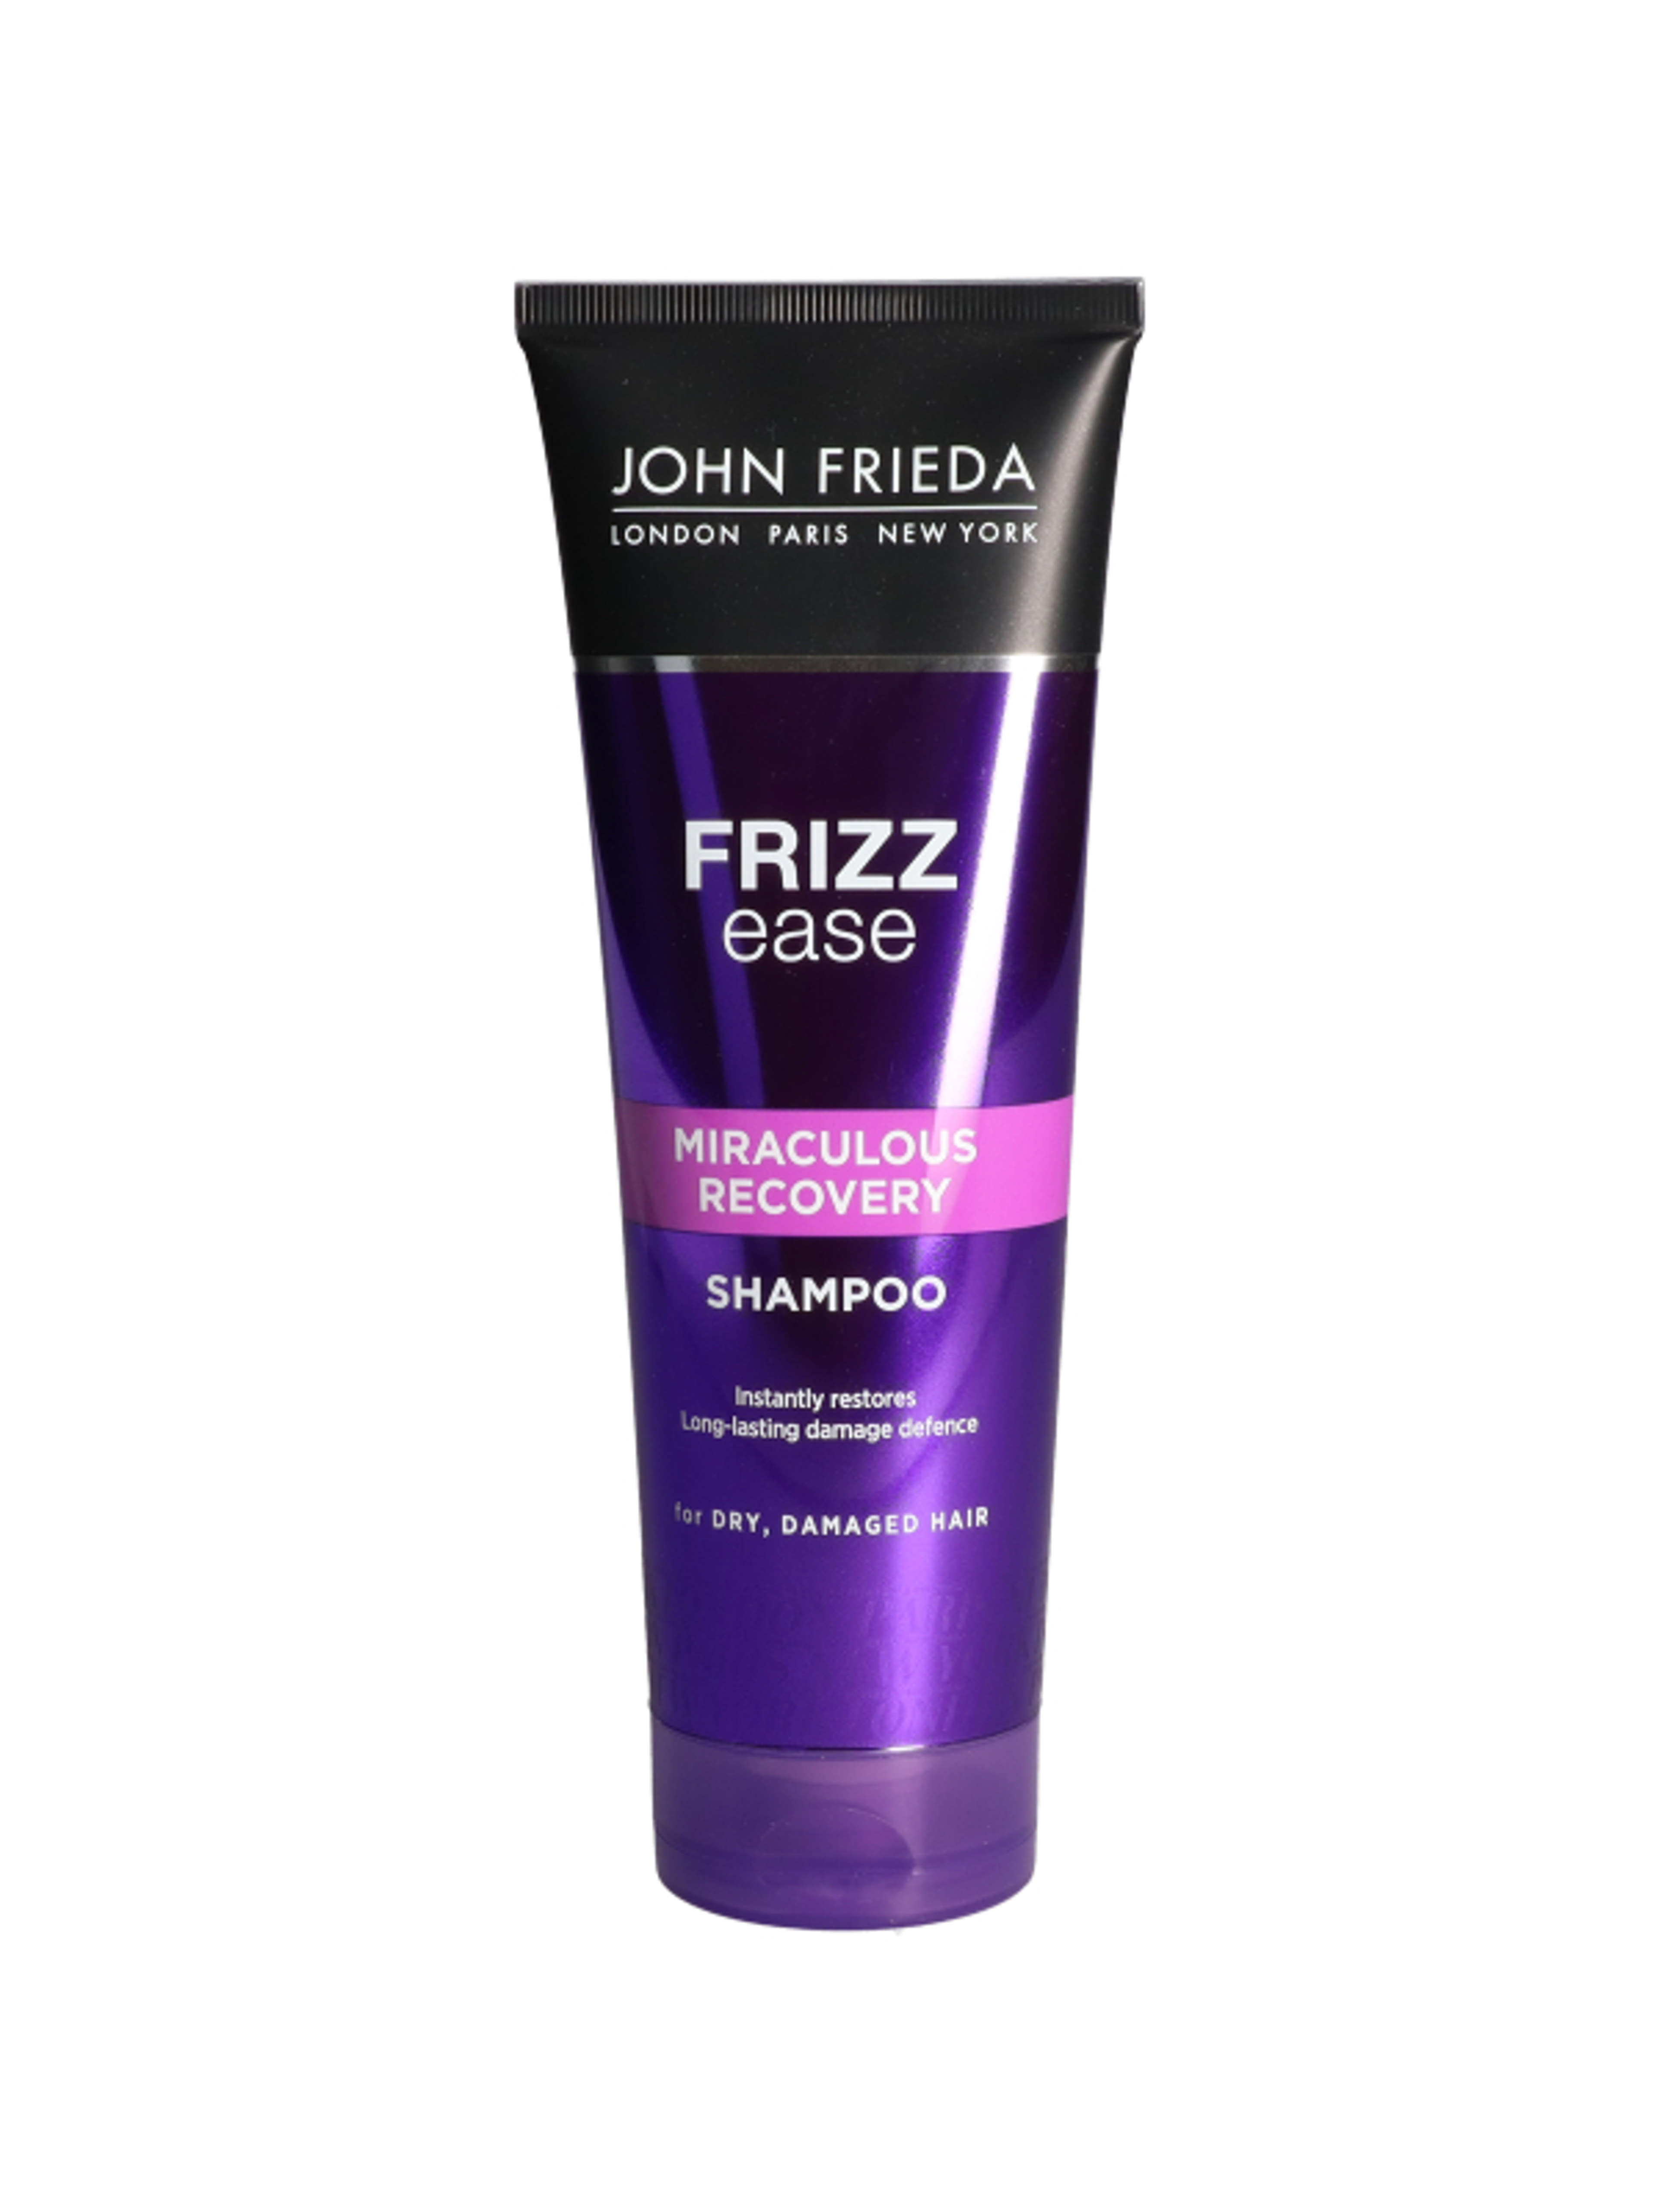 John Frieda frizz ease sampon - 250 ml-1